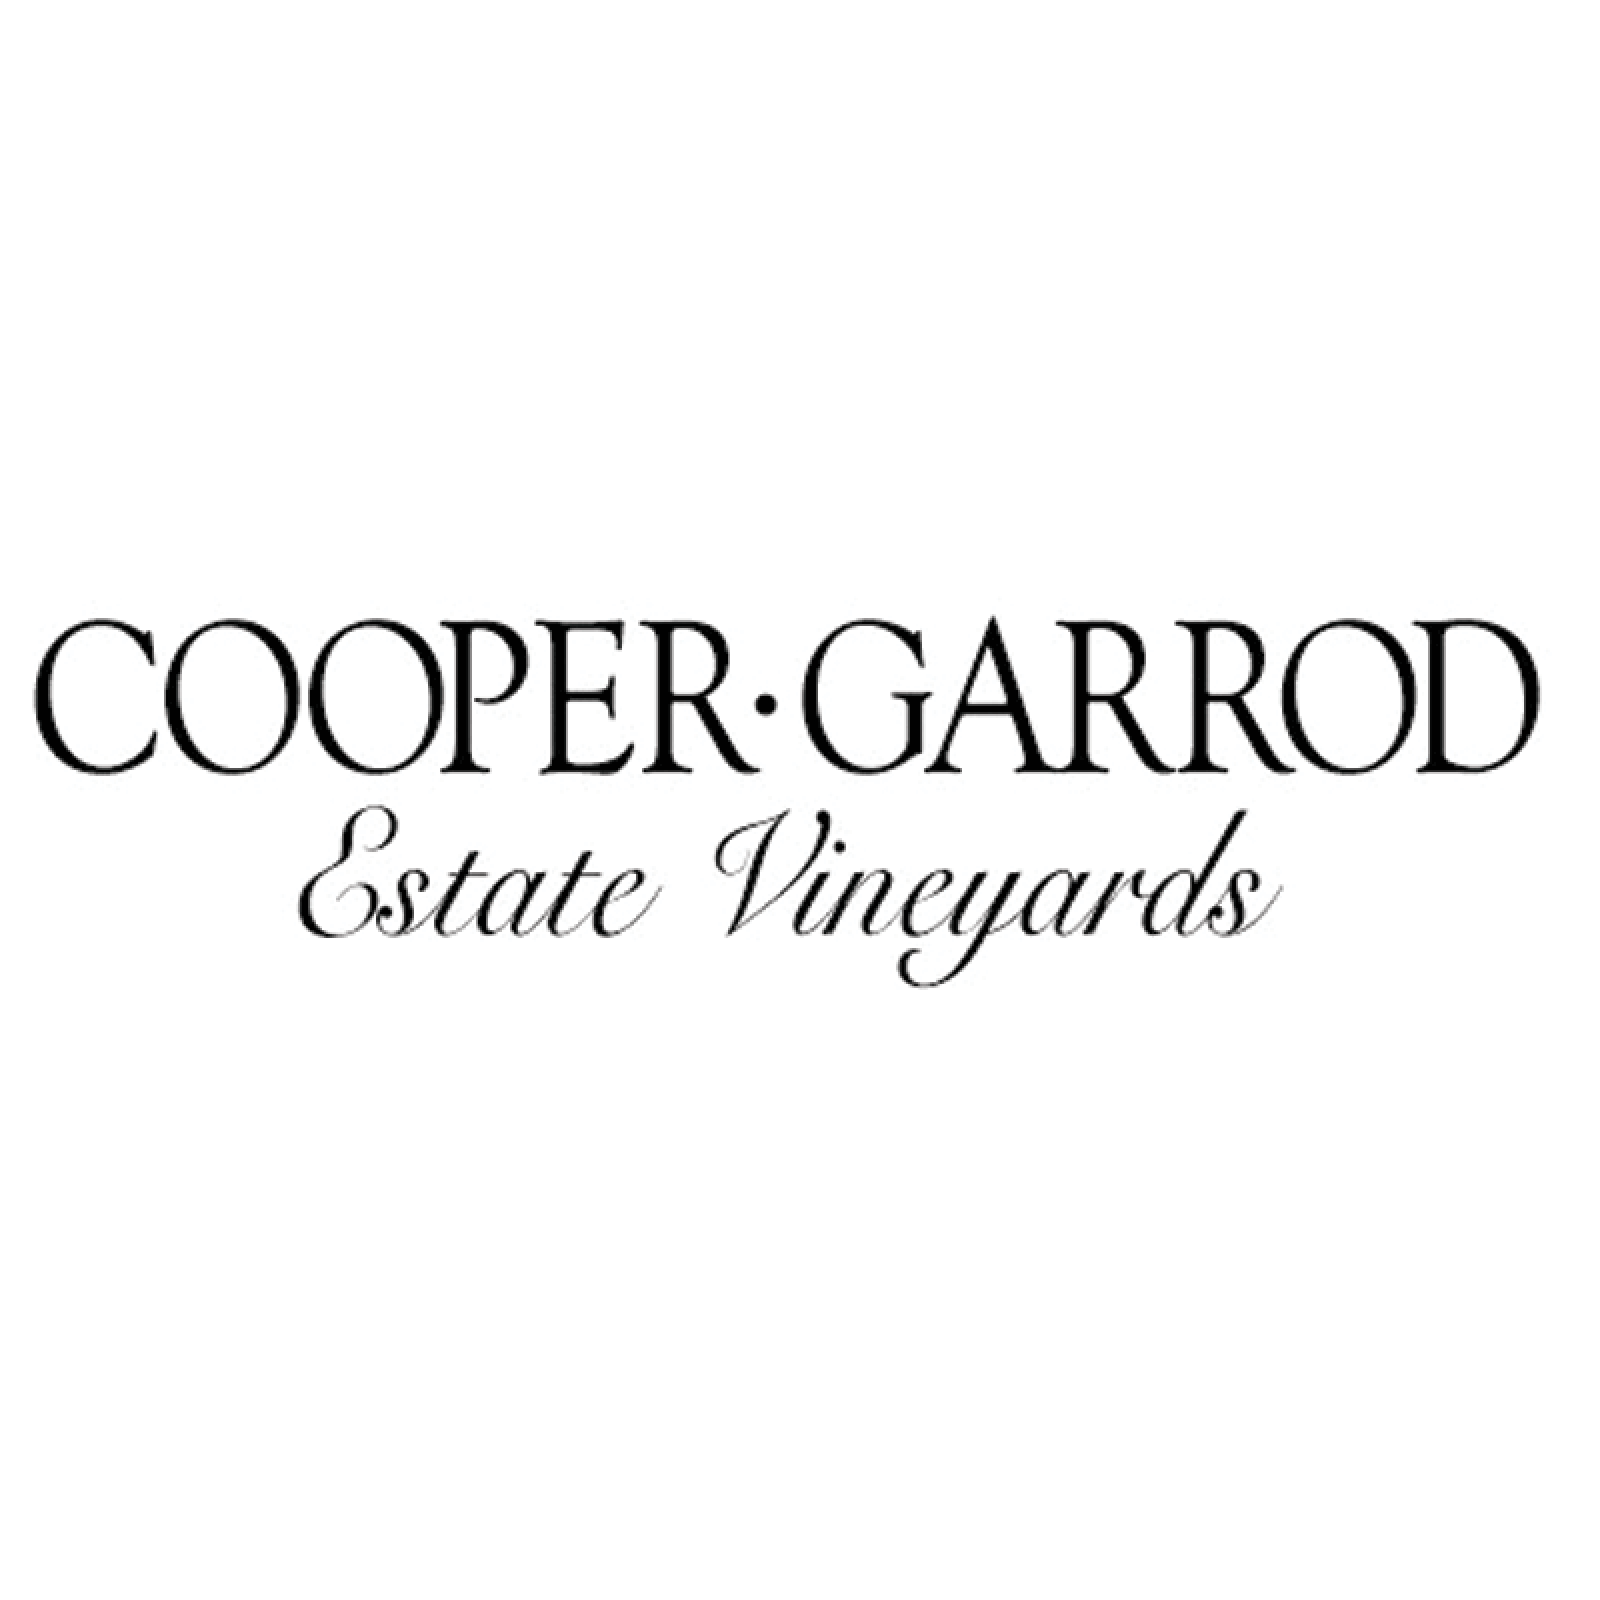 Cooper Garrod F7U Test Pilot 2019 Wine Label 